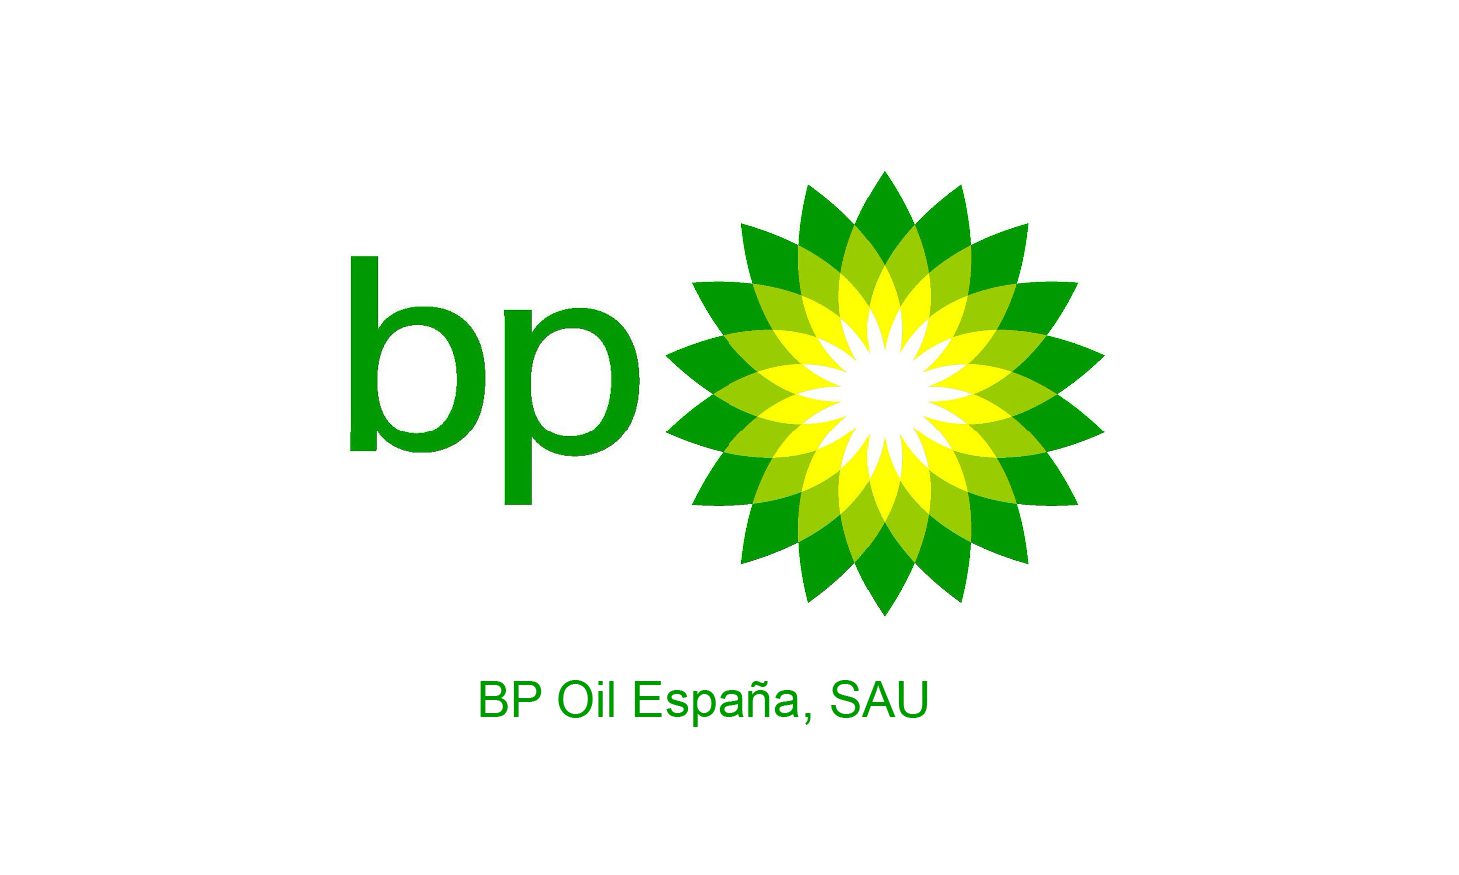 Bp Oil espana logo